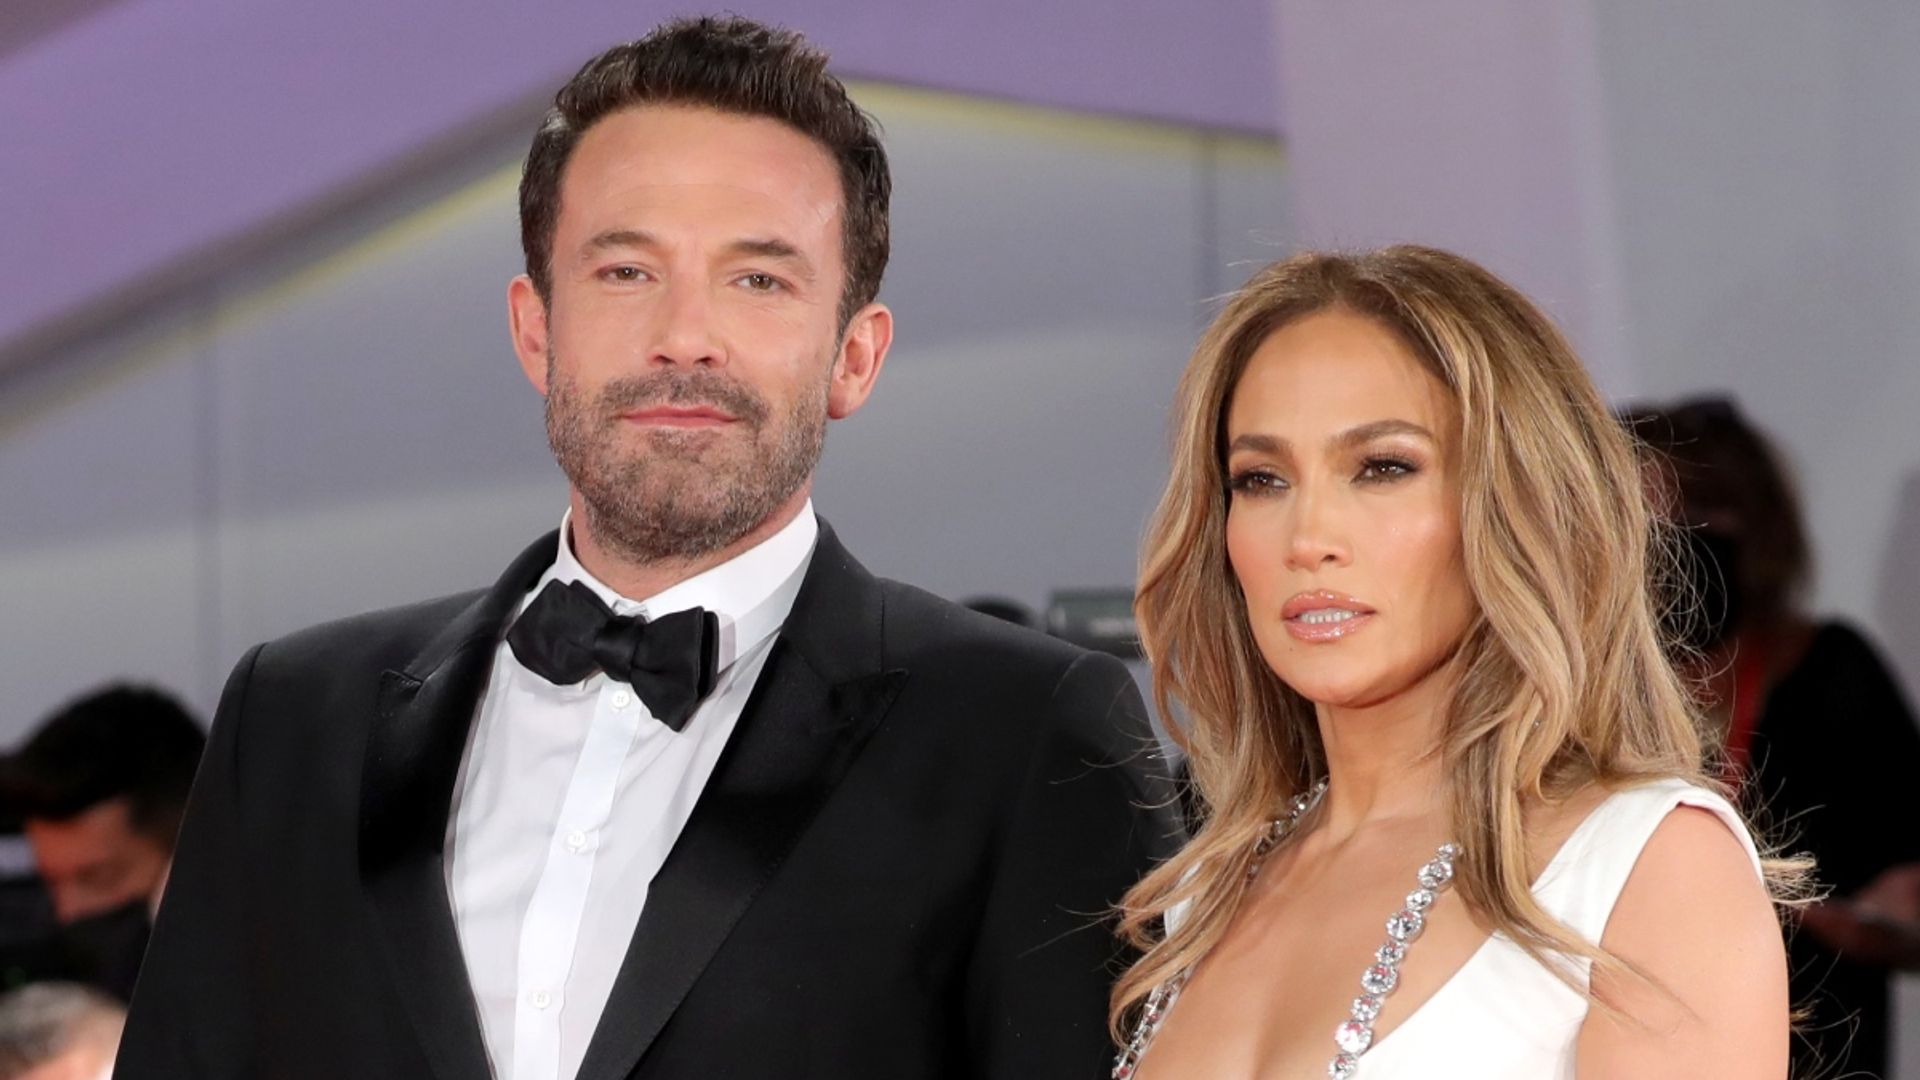 Jennifer Lopez's surprise move following tense Ben Affleck moments at